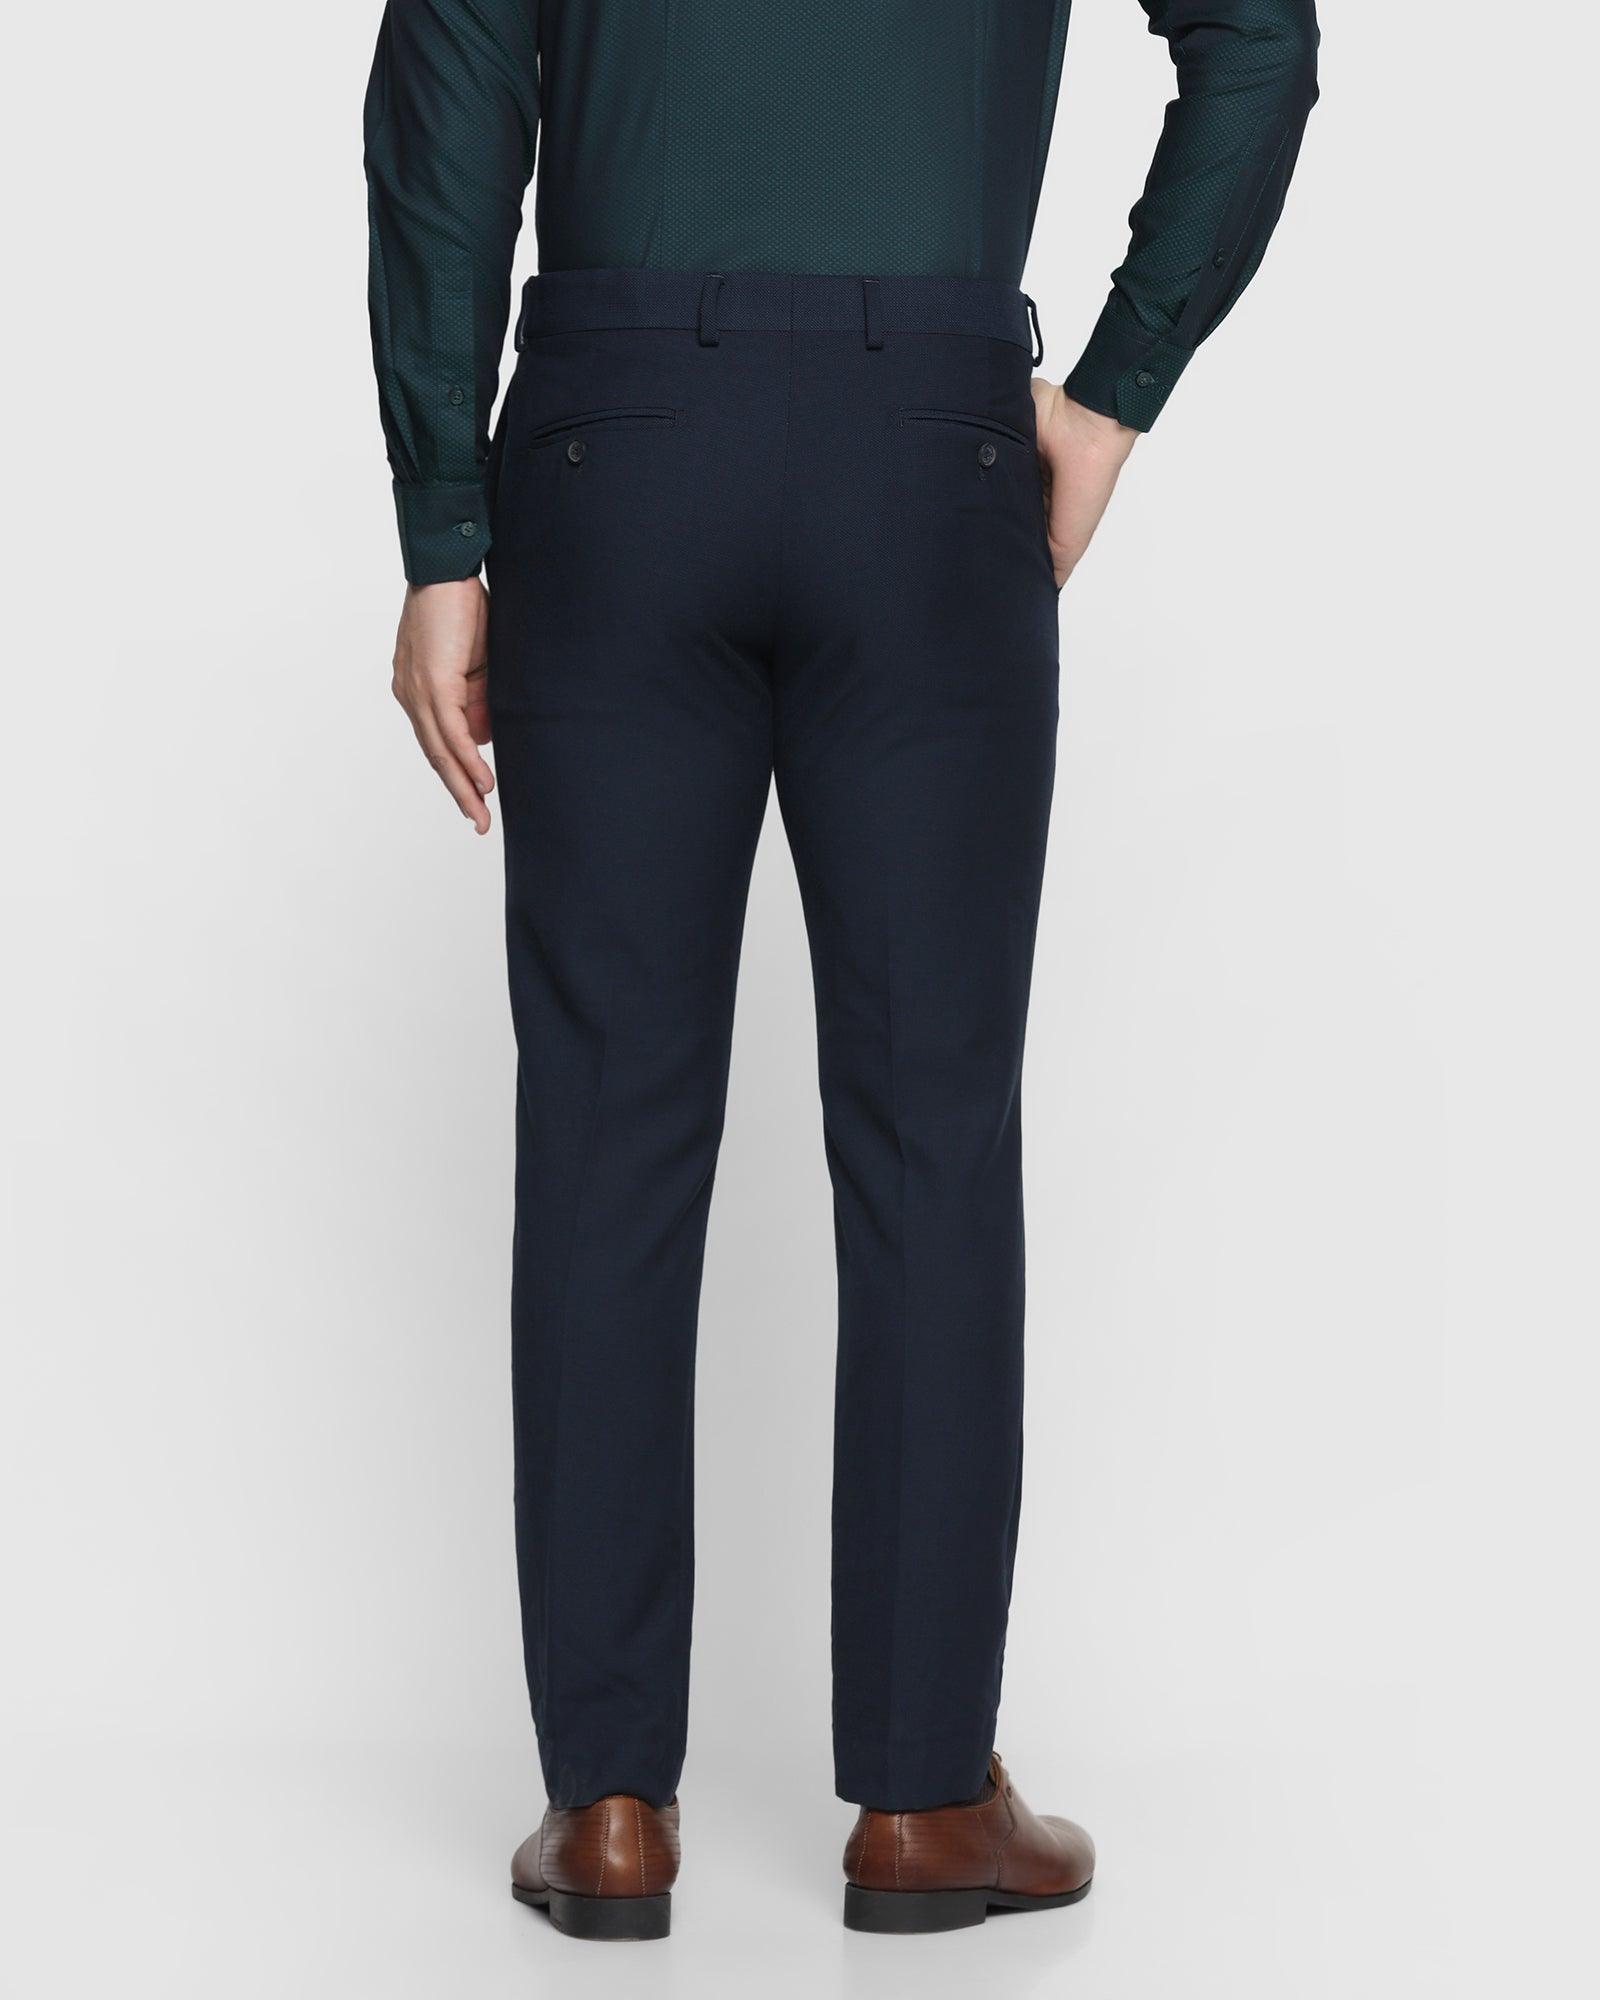 Buy ELANHOOD Men's Slim Fit Formal Trousers/Pant Blue at Amazon.in